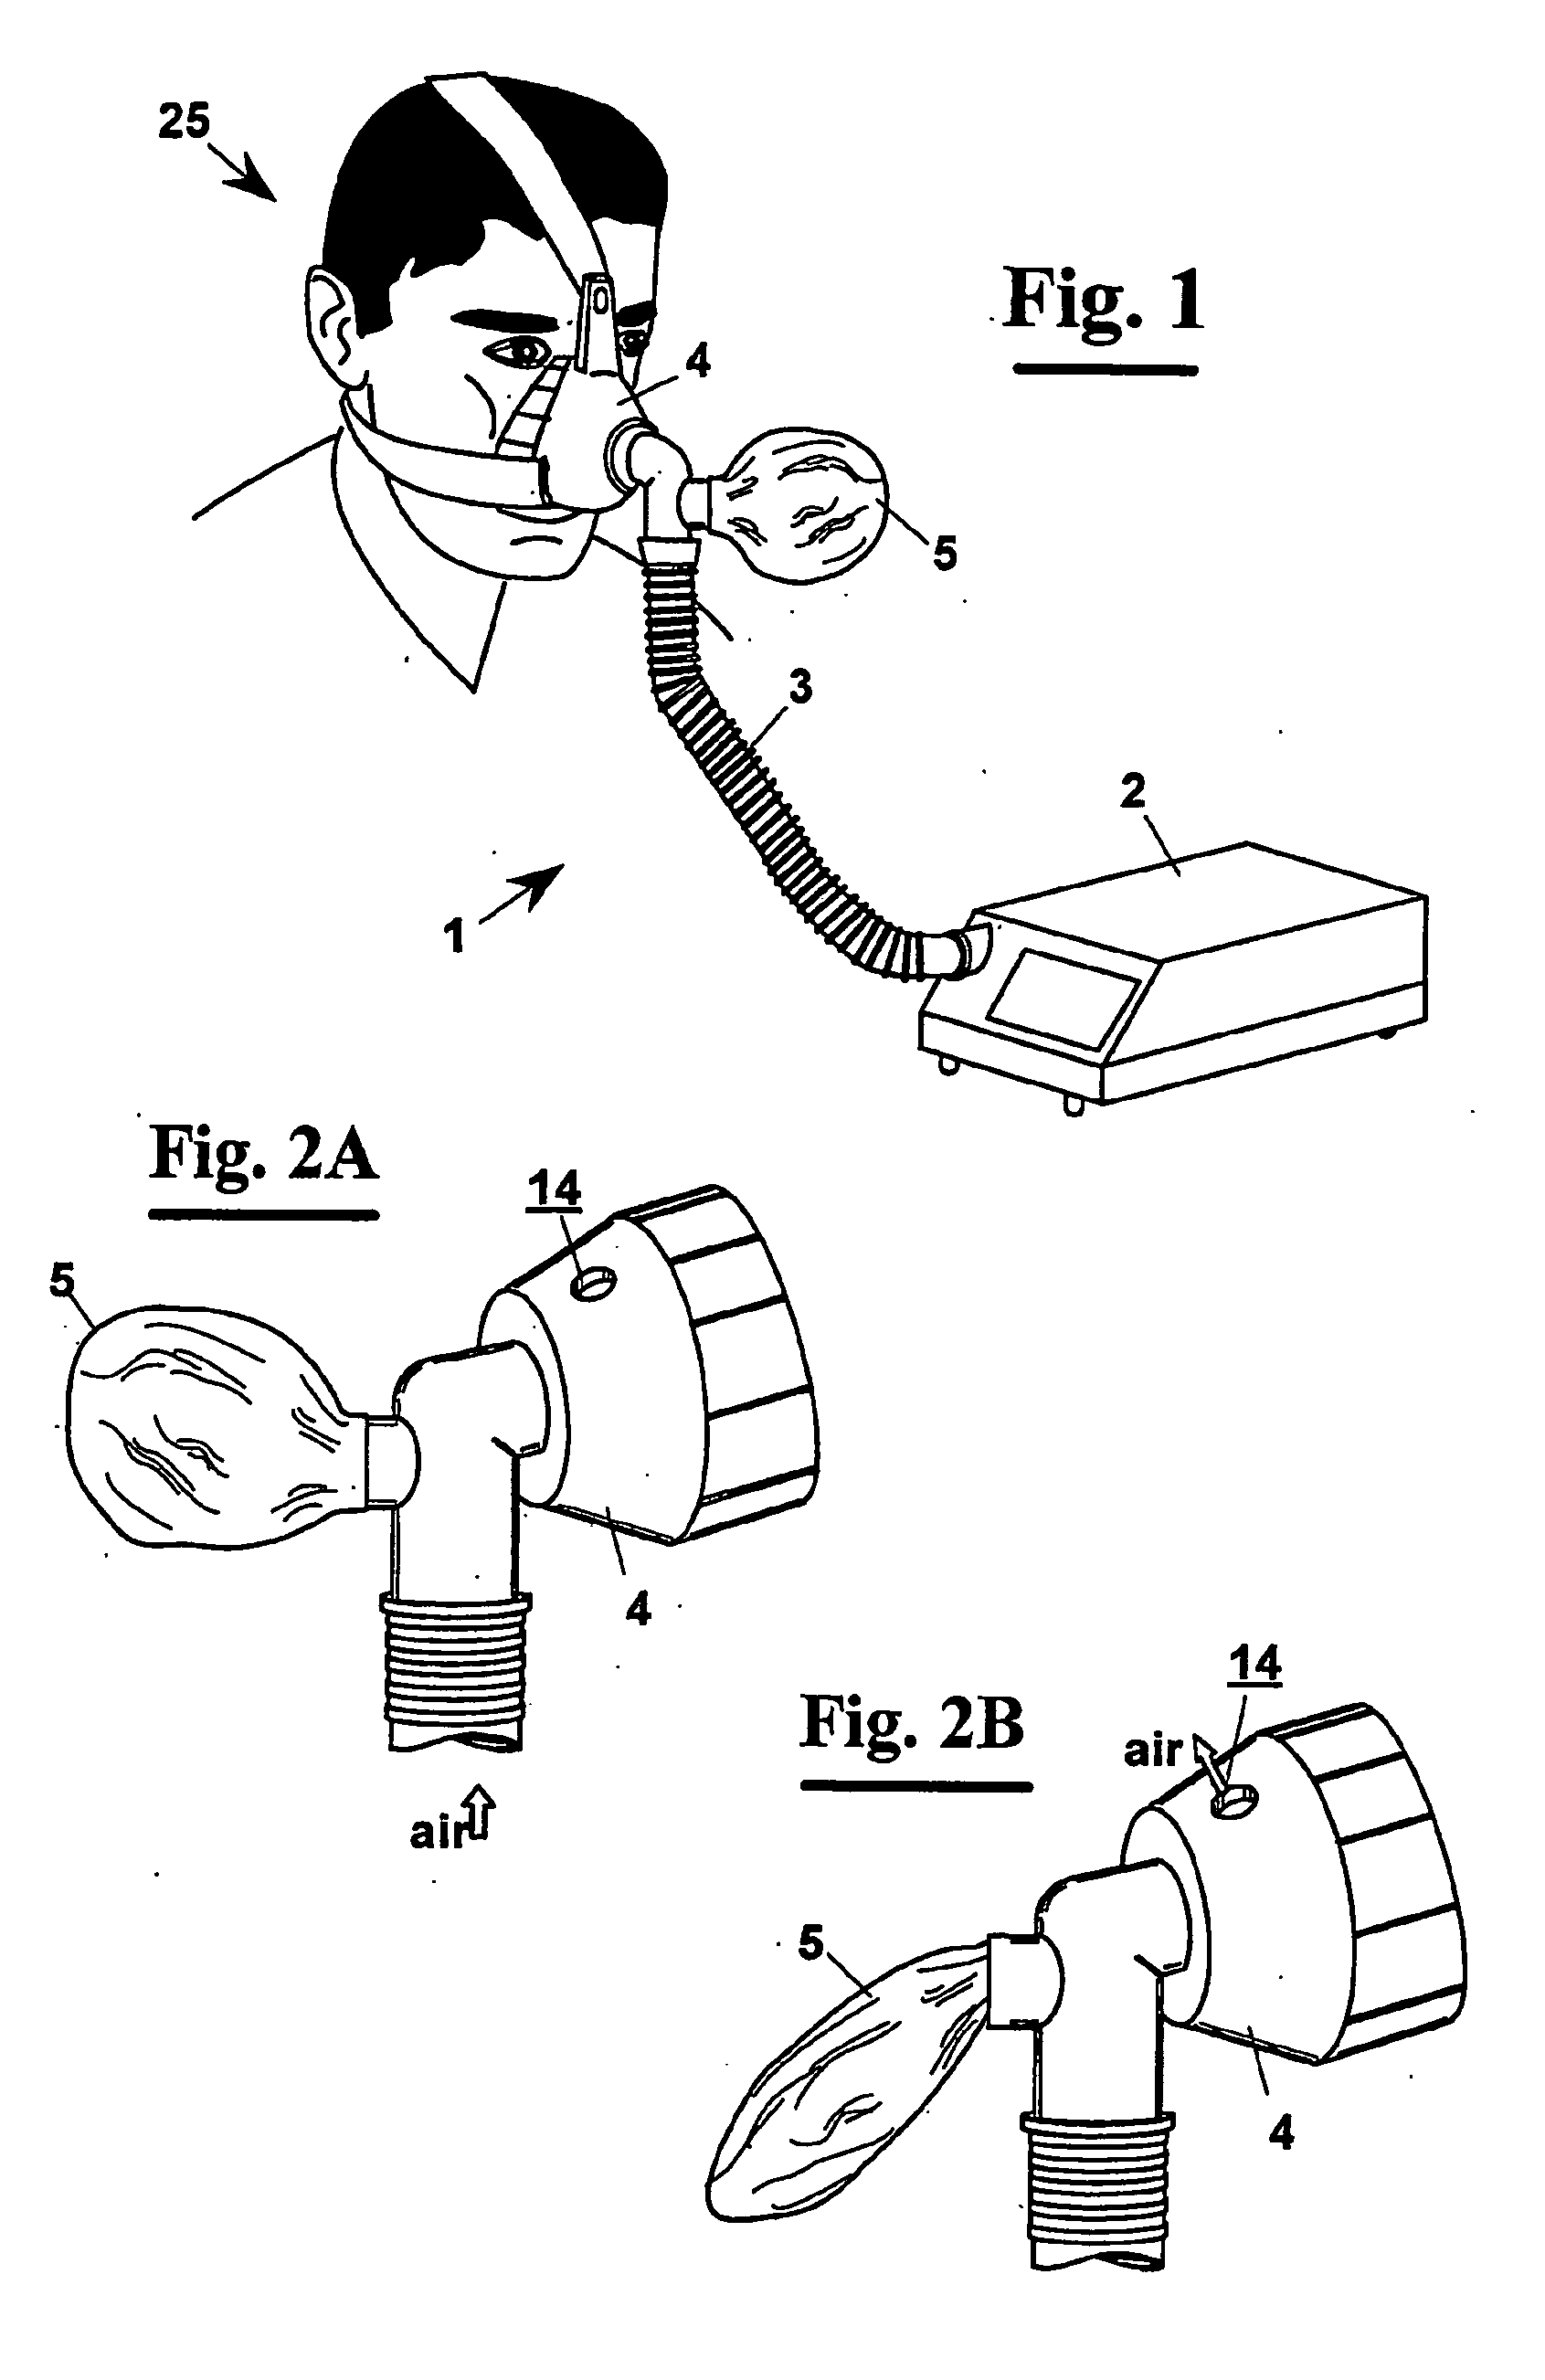 Apparatus for non-invasive mechanical ventilation